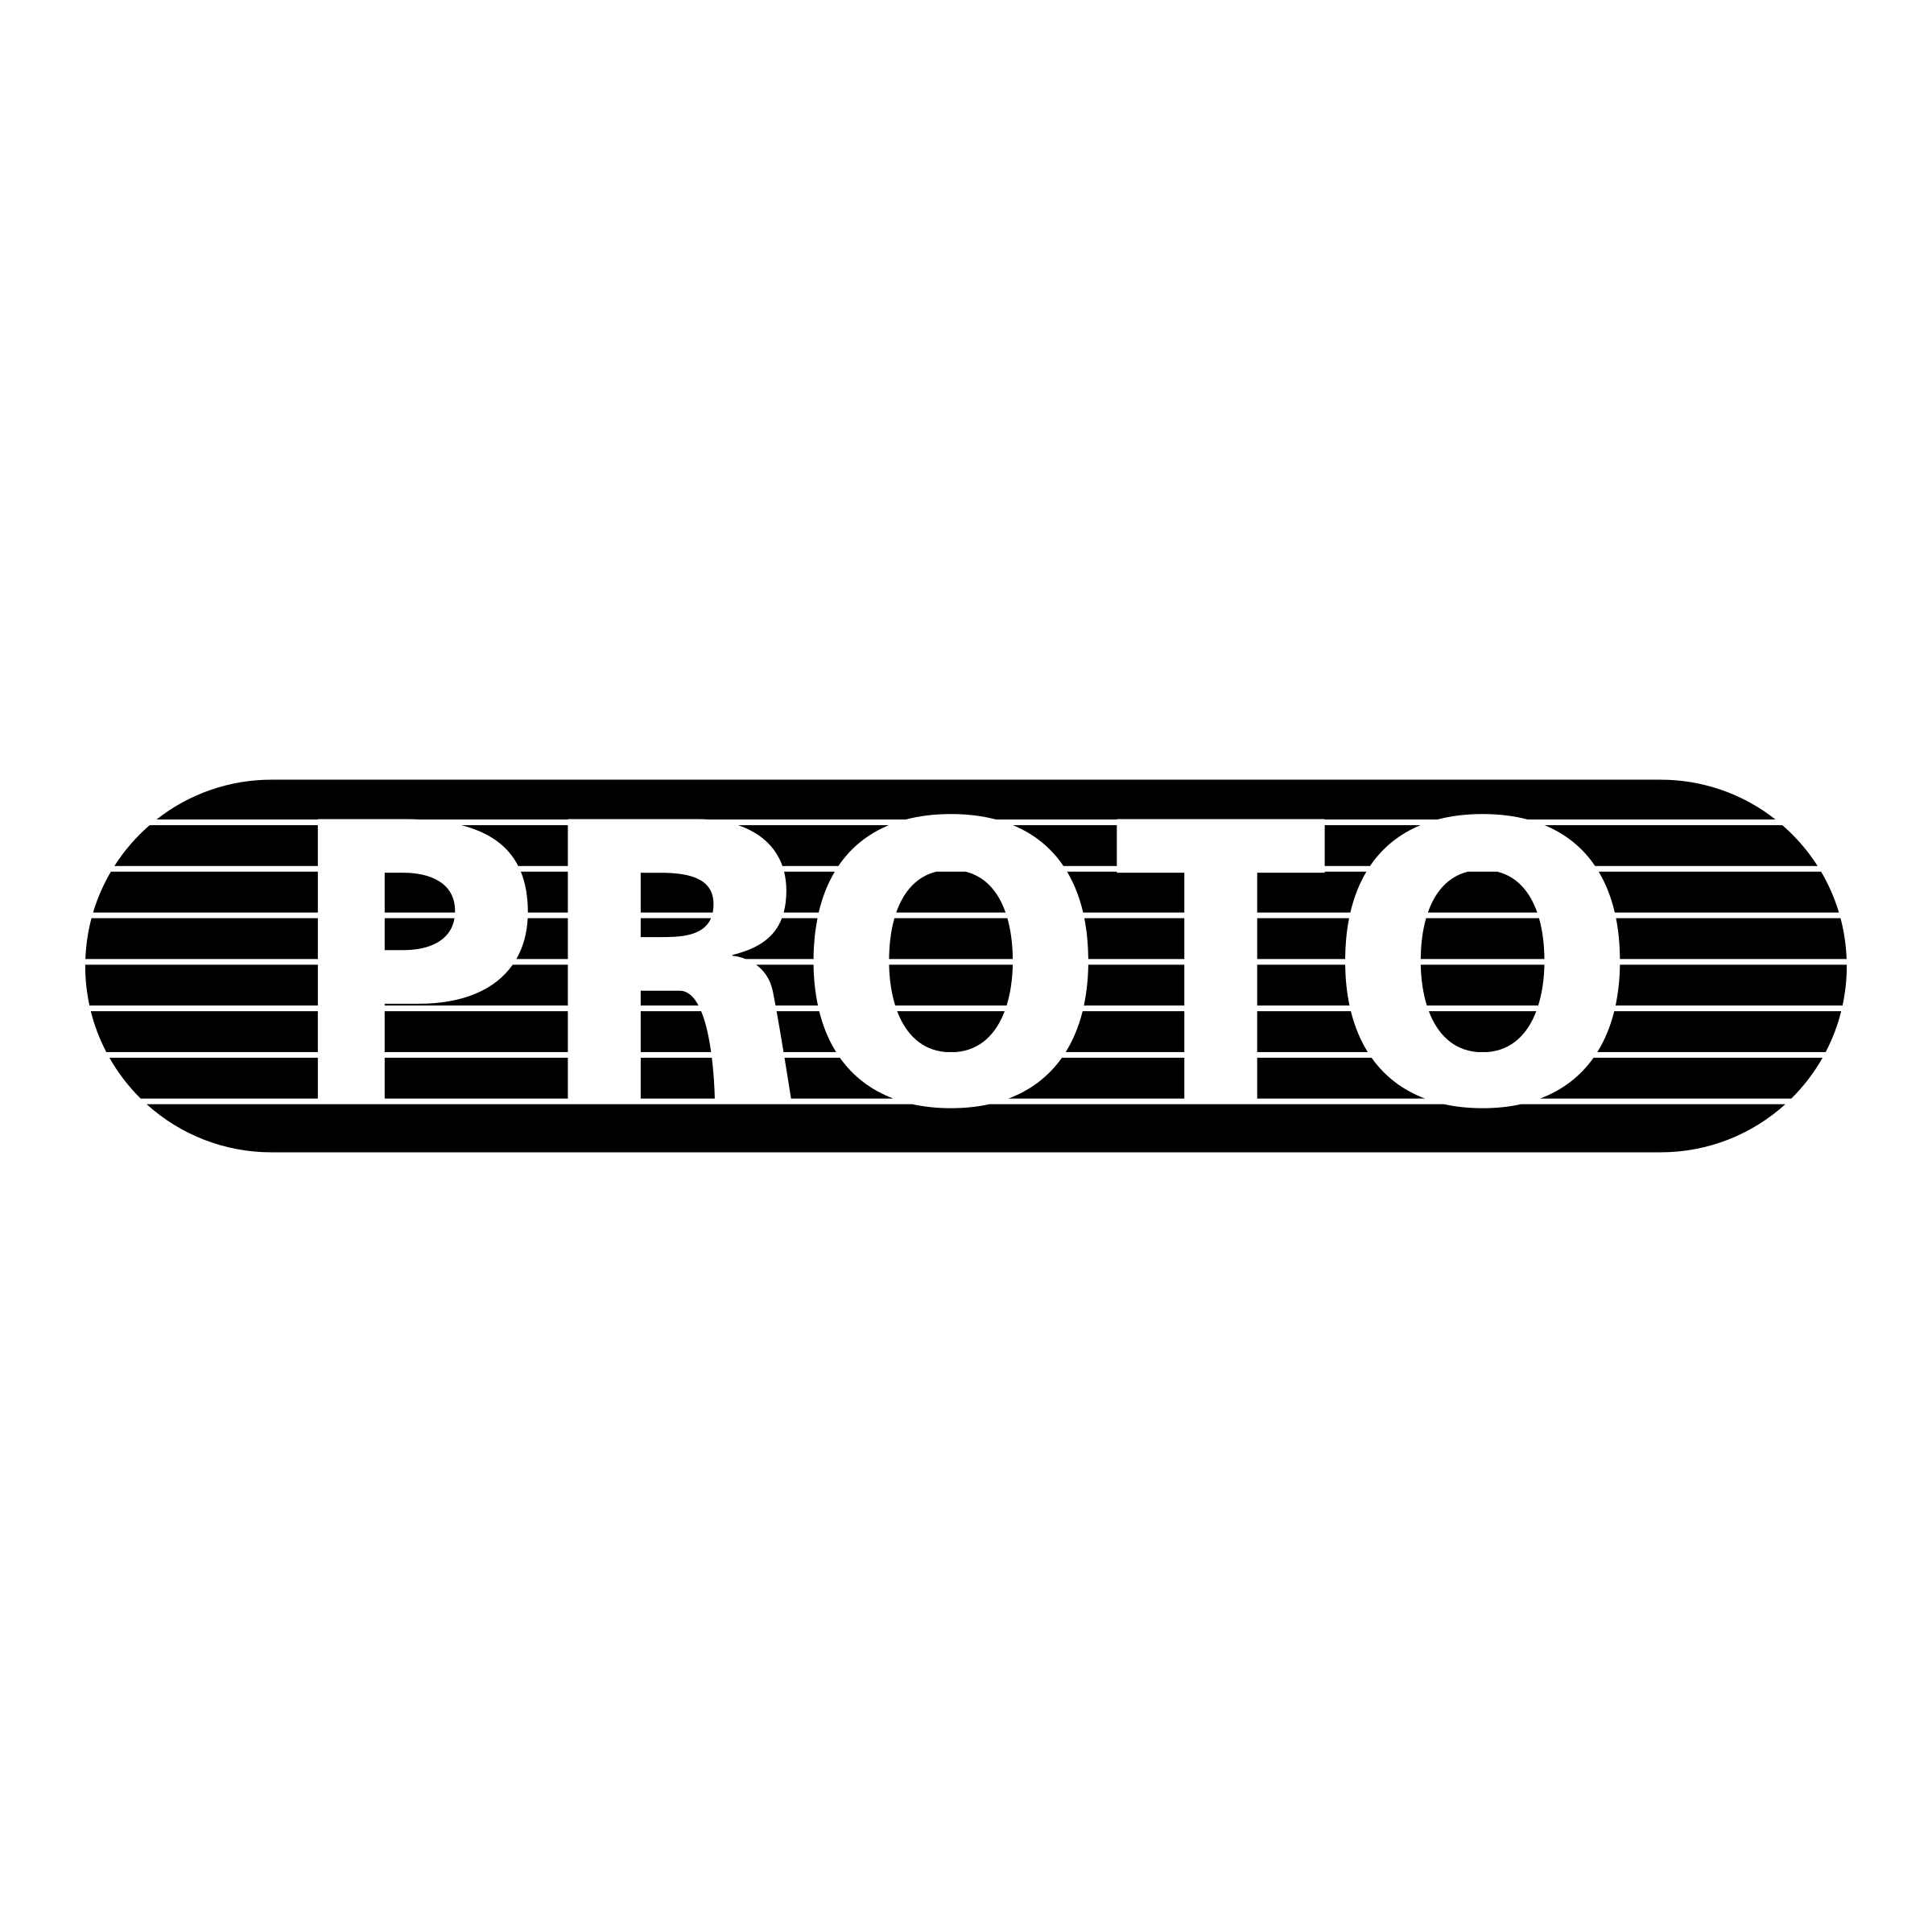 Proto Logo - Proto Logo PNG Transparent & SVG Vector - Freebie Supply